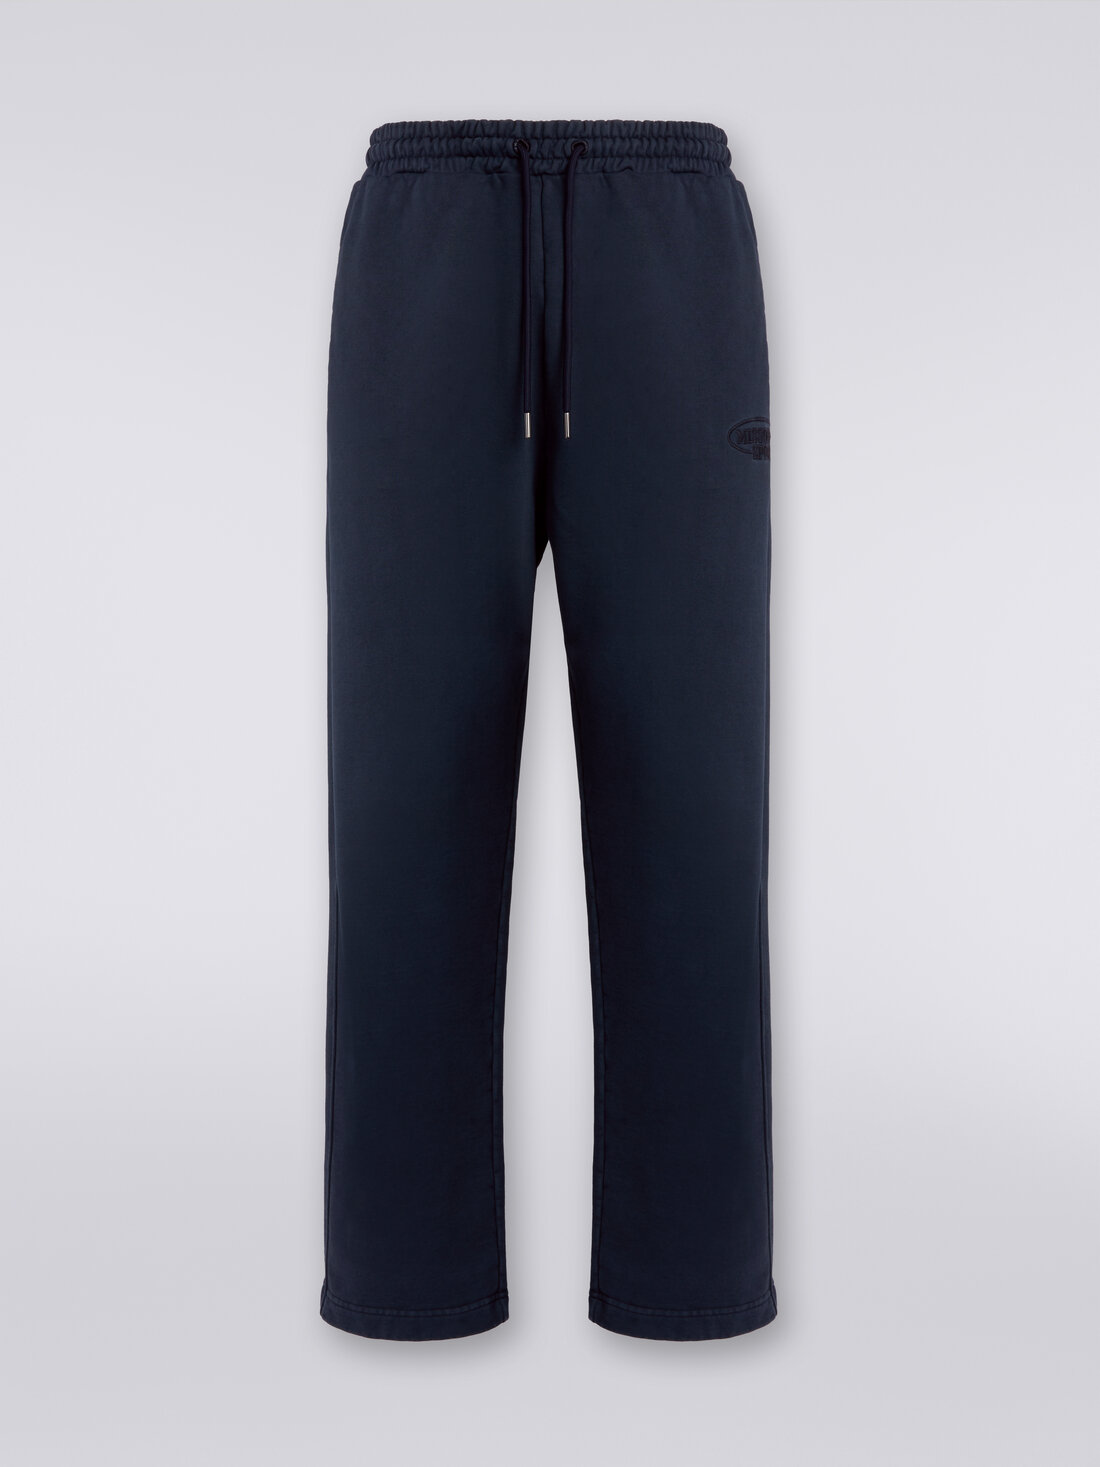 Trousers in cotton fleece with logo, Navy Blue  - TS24SI00BJ00H0S72EU - 0